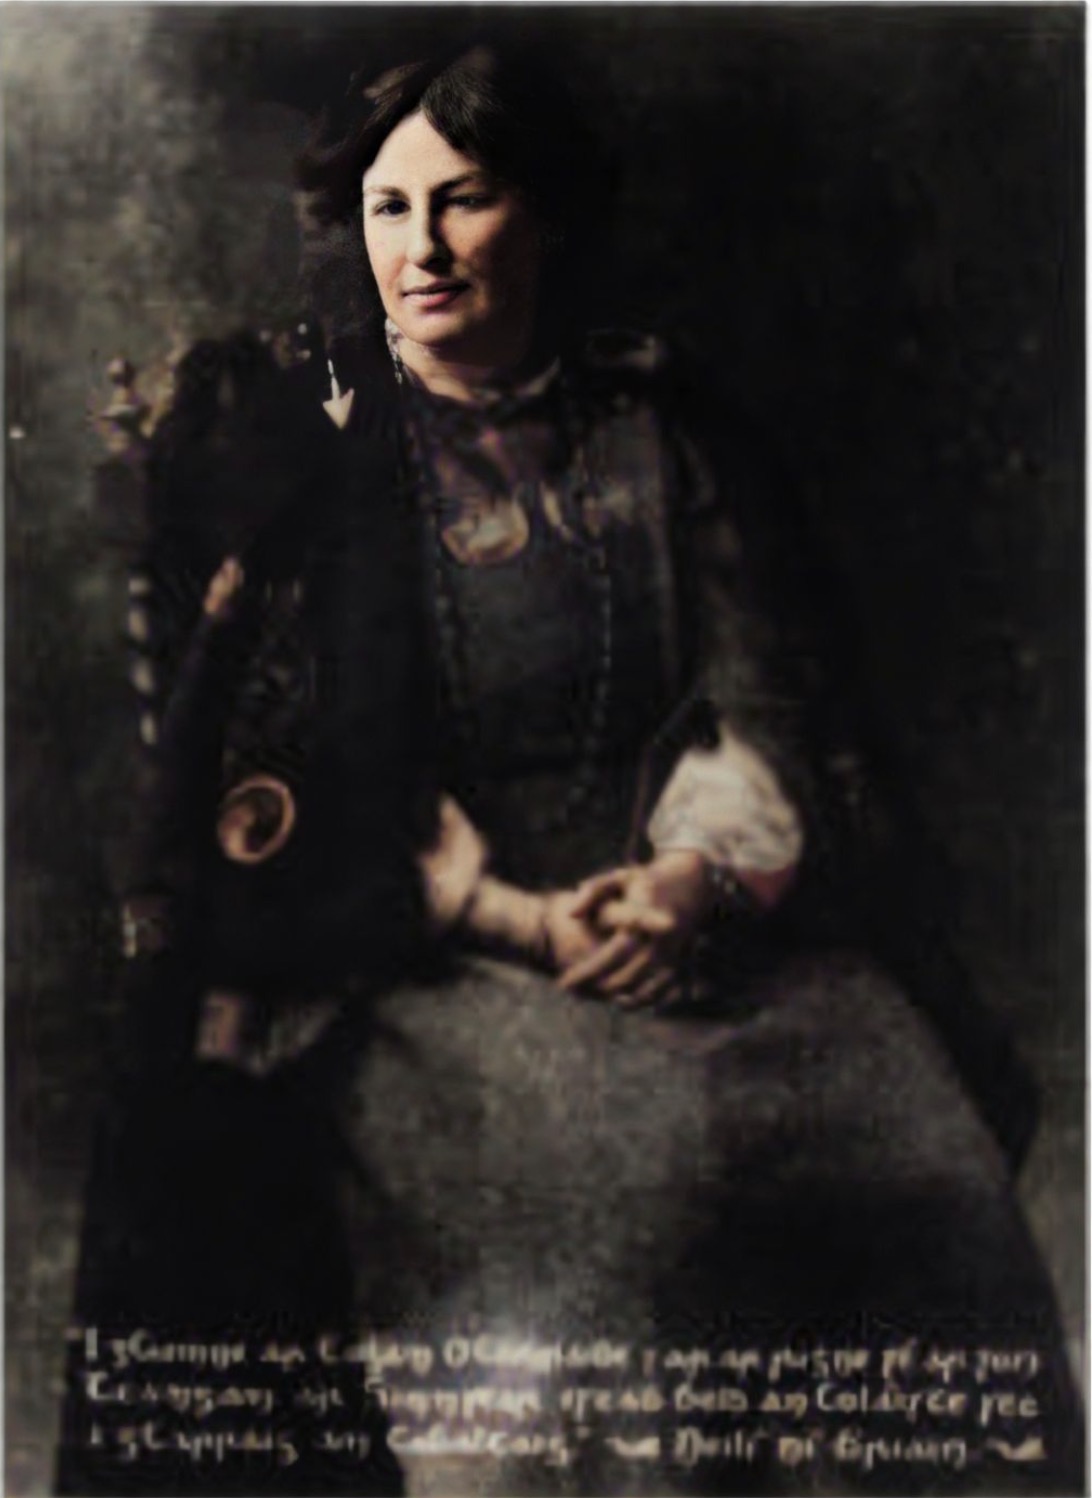 Charlotte Grace O'Brien dressed in a Celtic costume.